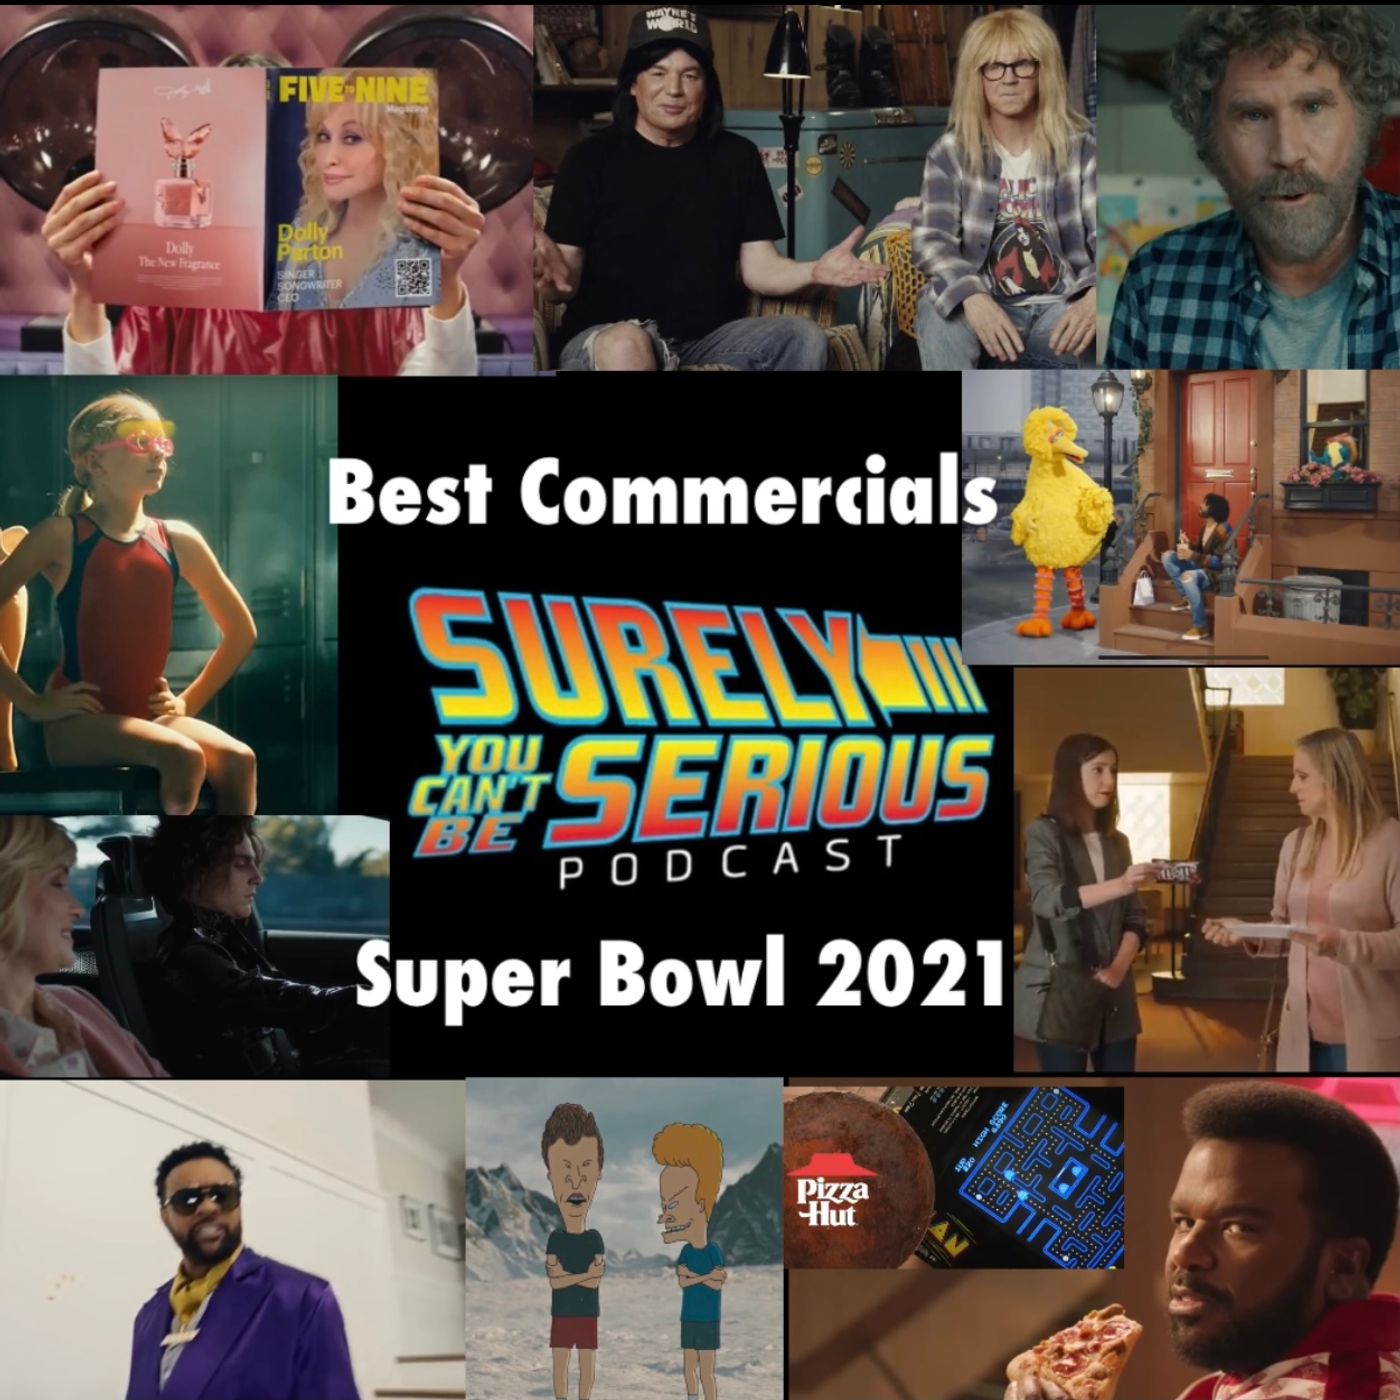 Best Super Bowl Commercials 2021